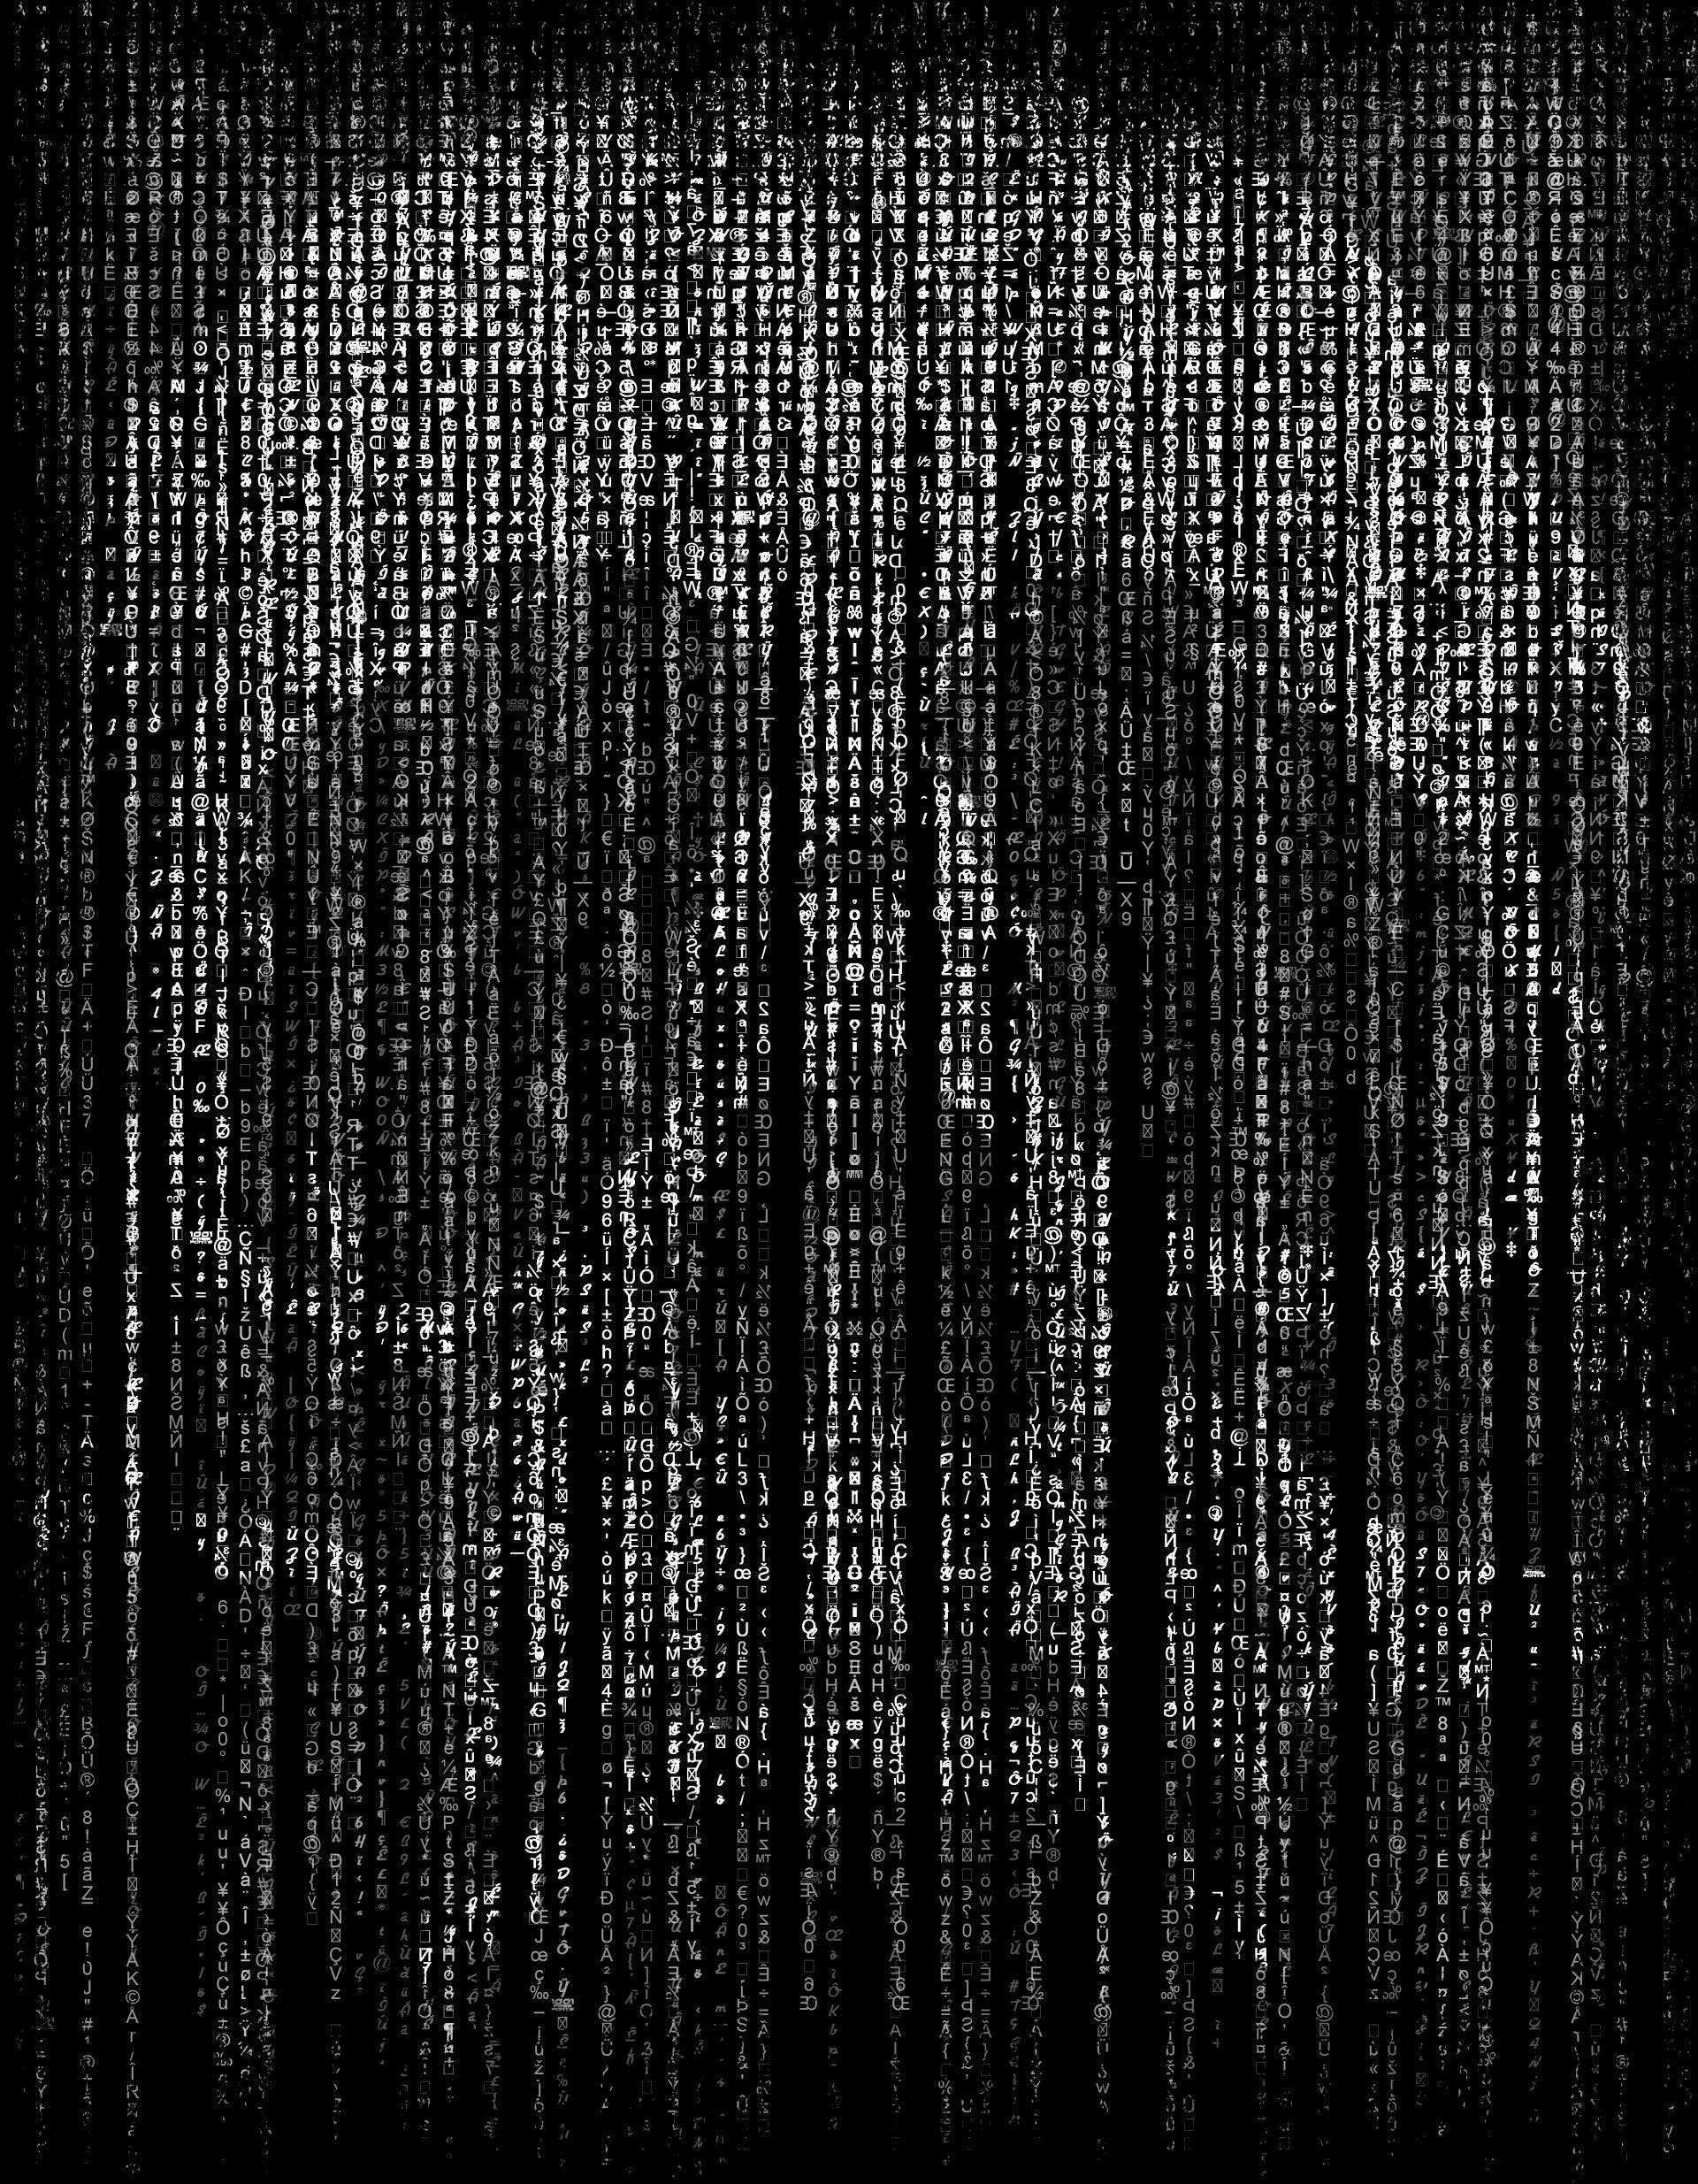 Wallpaper  Hack 1920x1080 px Anarchy Anonymous binary code computer  dark hacker hacking internet sadic virus 1920x1080  goodfon  1595565   HD Wallpapers  WallHere